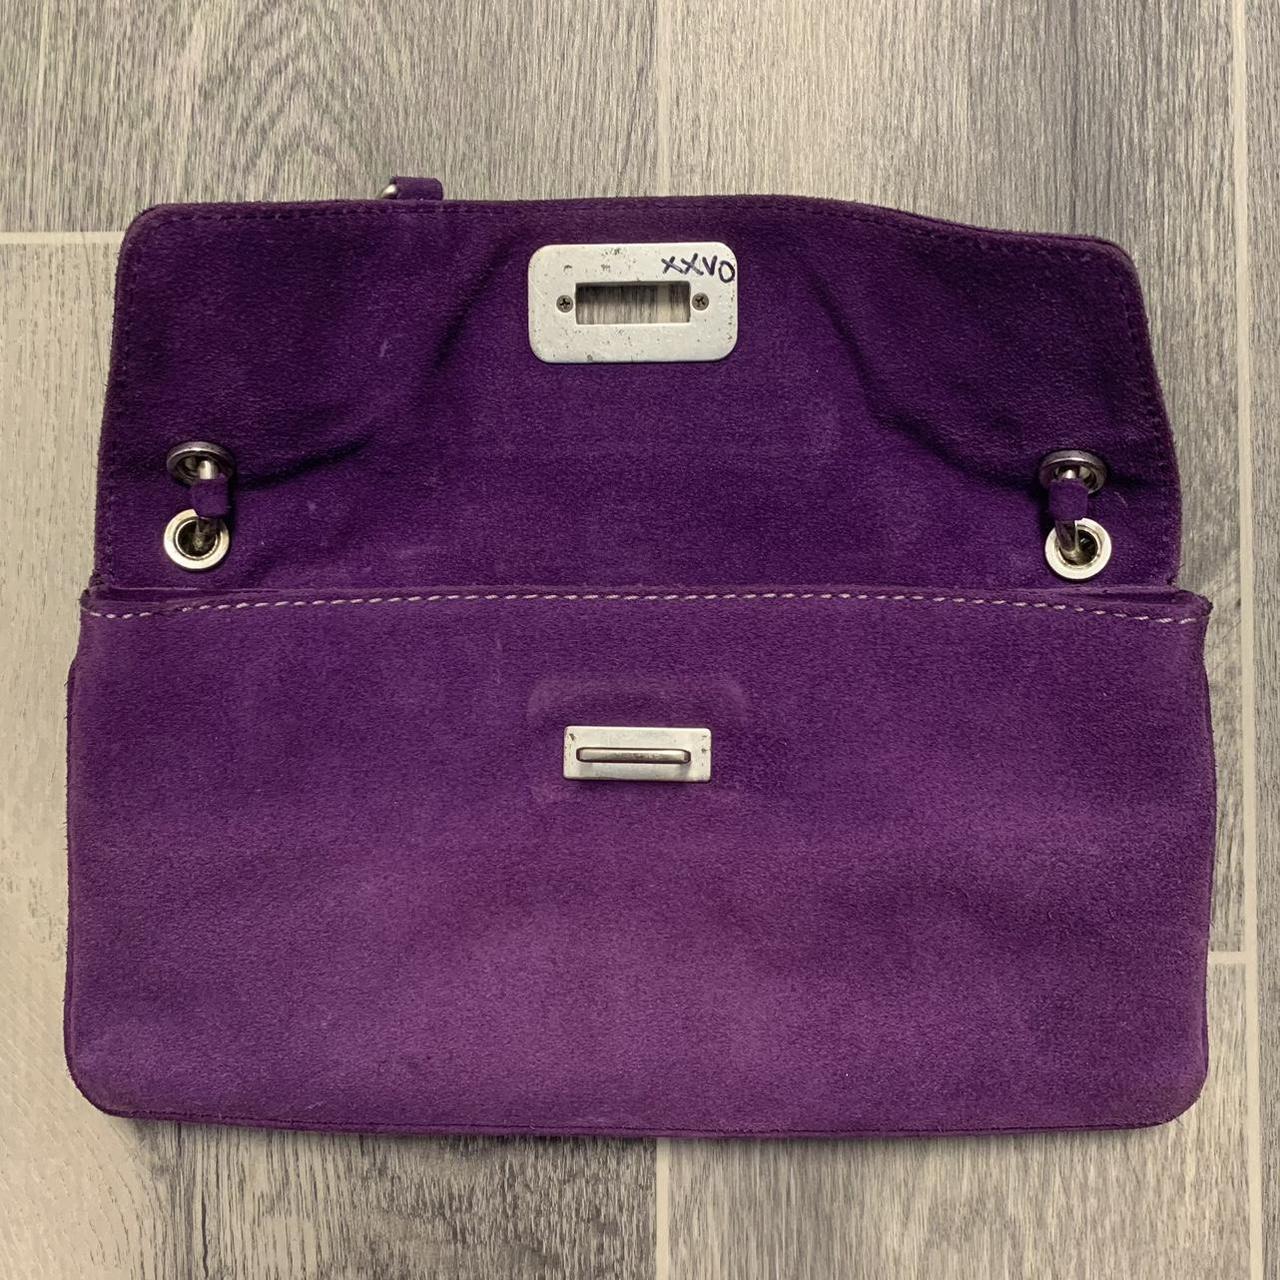 Michael Kors Handbag Colour : Lilac / Purple Style - Depop